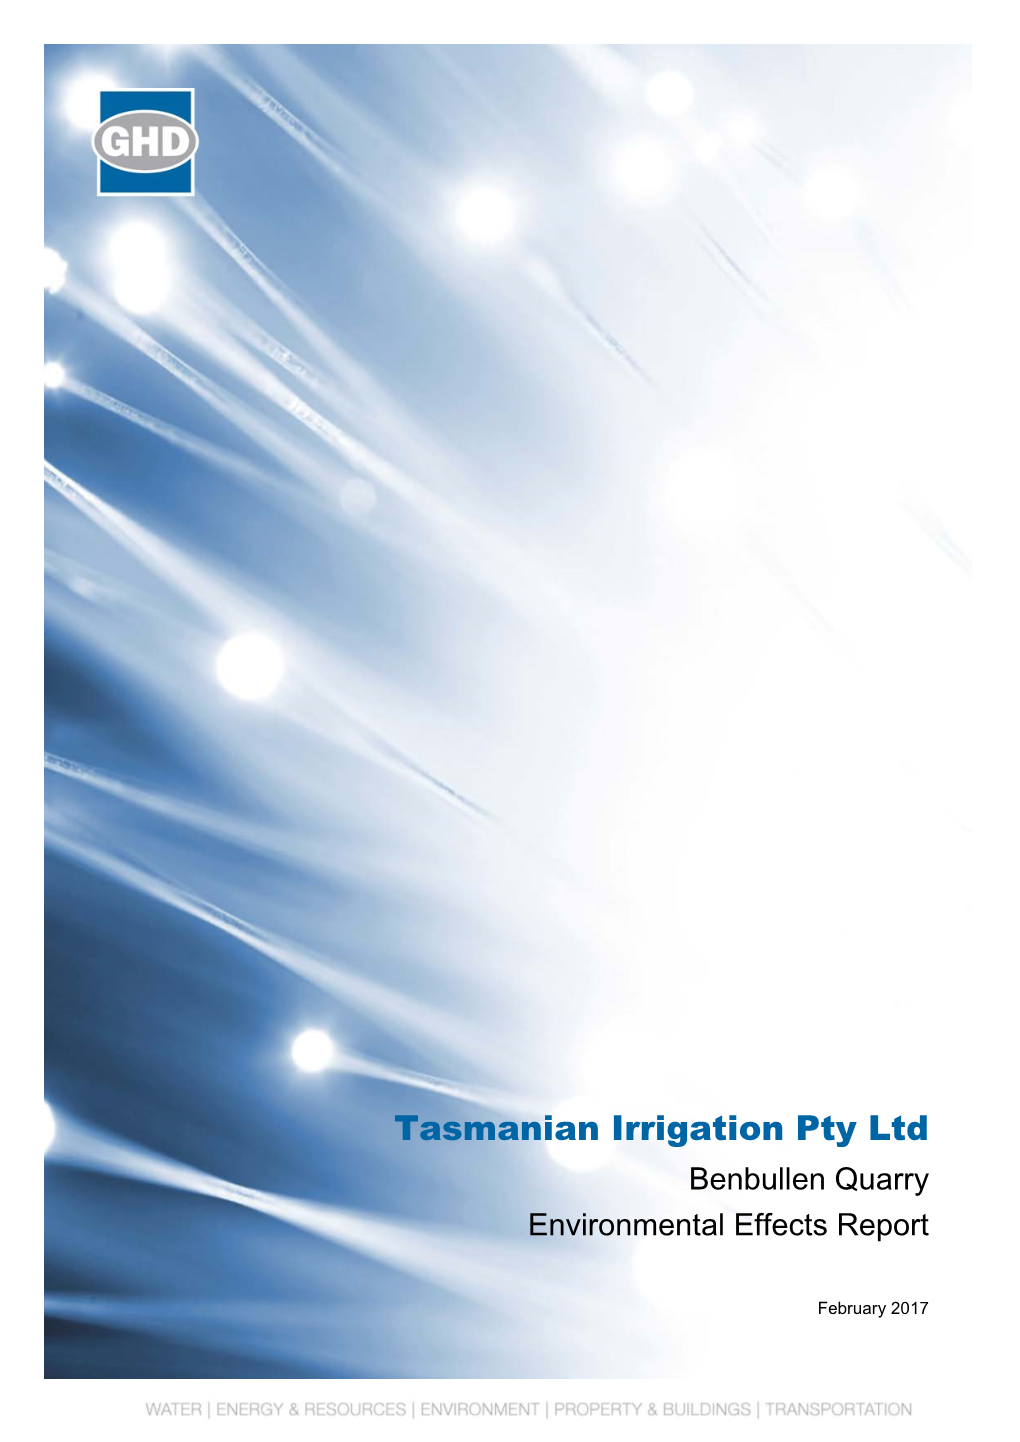 Tasmanian Irrigation Pty Ltd, Benbullen Quarry